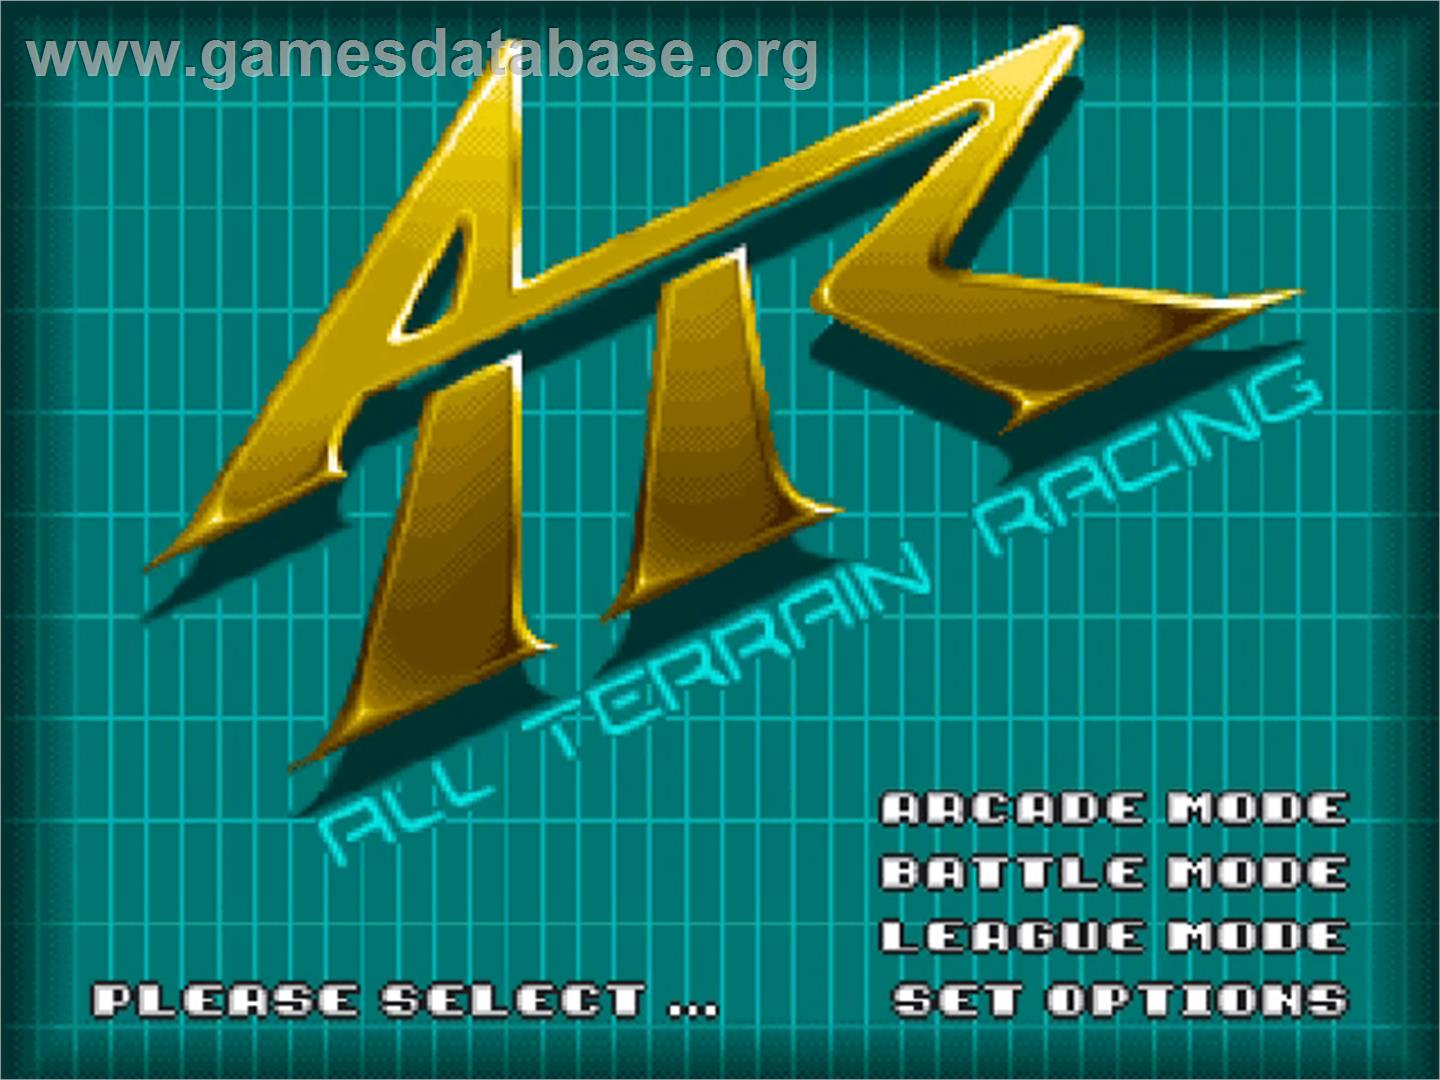 ATR: All Terrain Racing - Commodore Amiga CD32 - Artwork - Title Screen